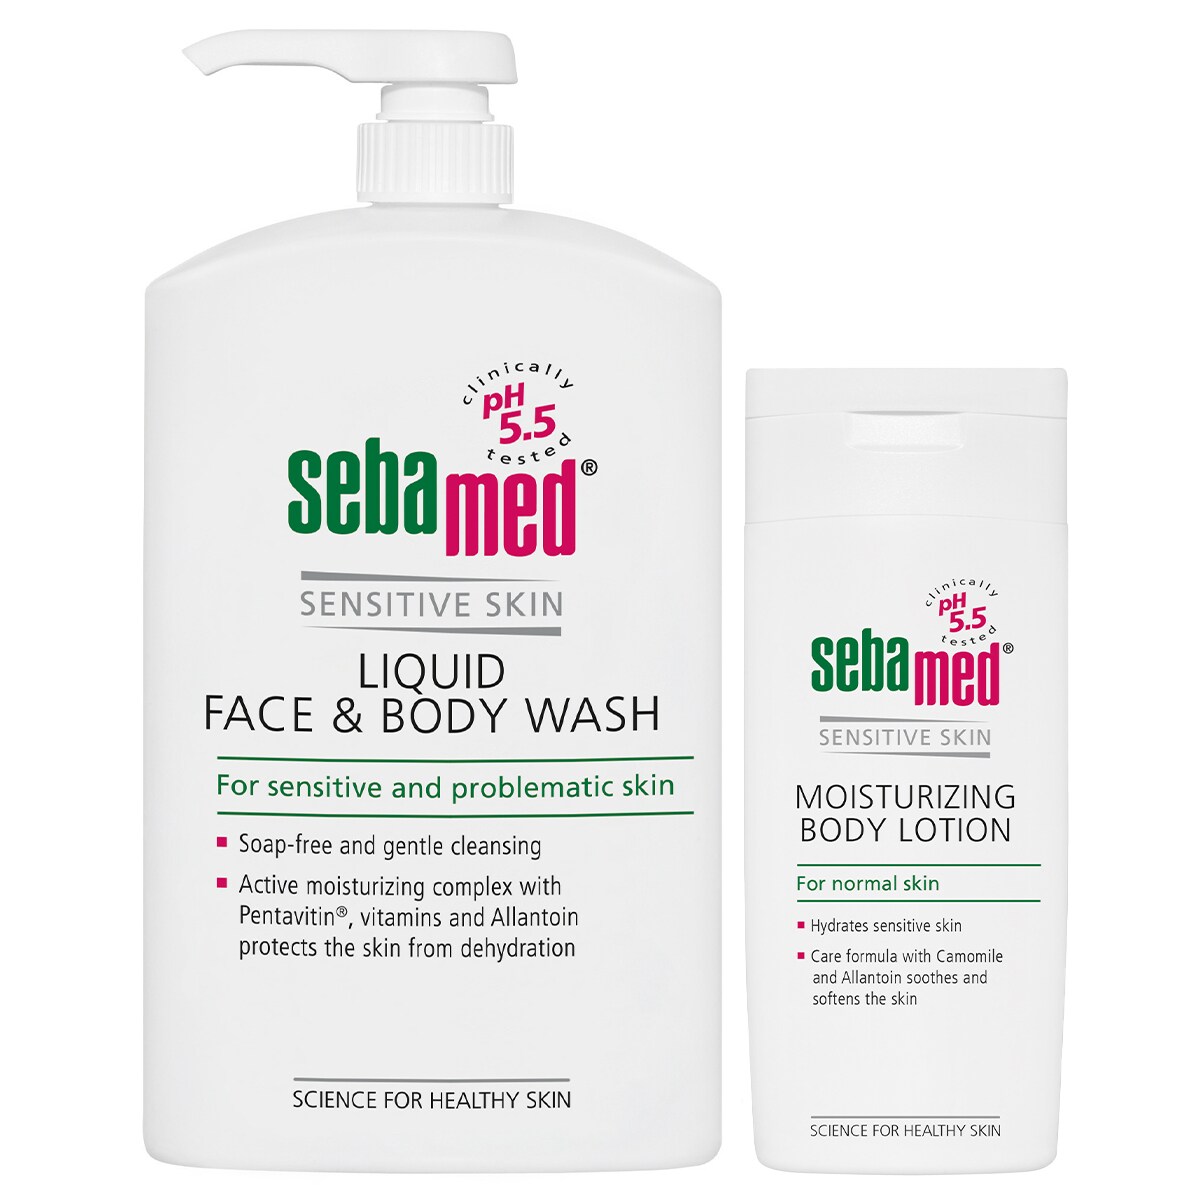 Sebamed Liquid Face & Body Wash 1L + 200ml Lotion Bonus Pack